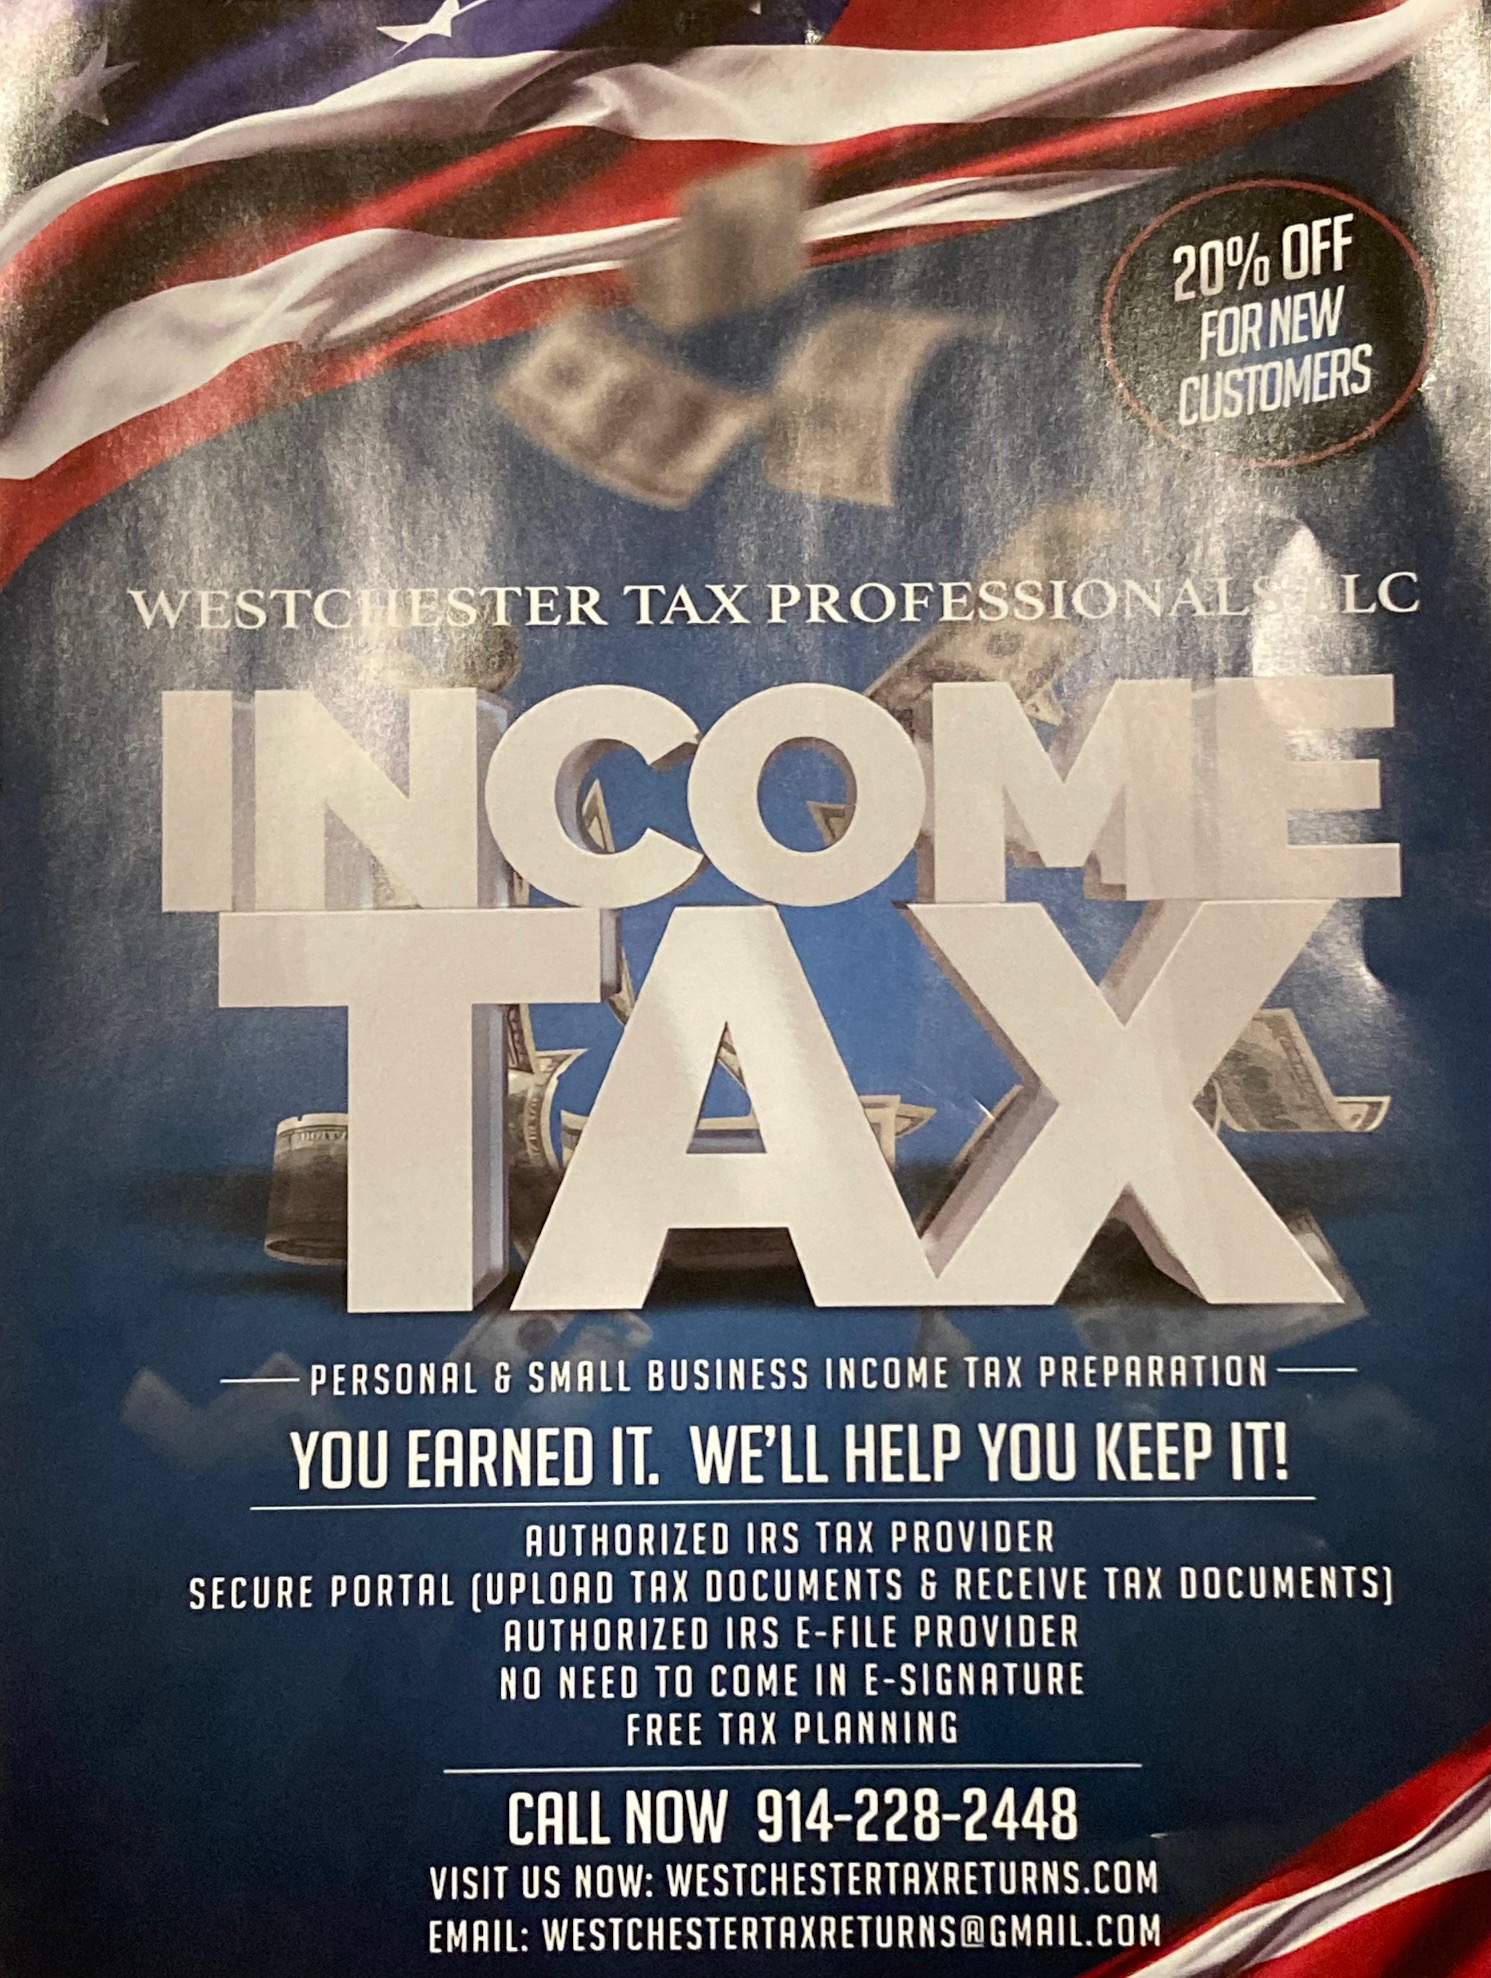 Westchester Tax Professionals LLC